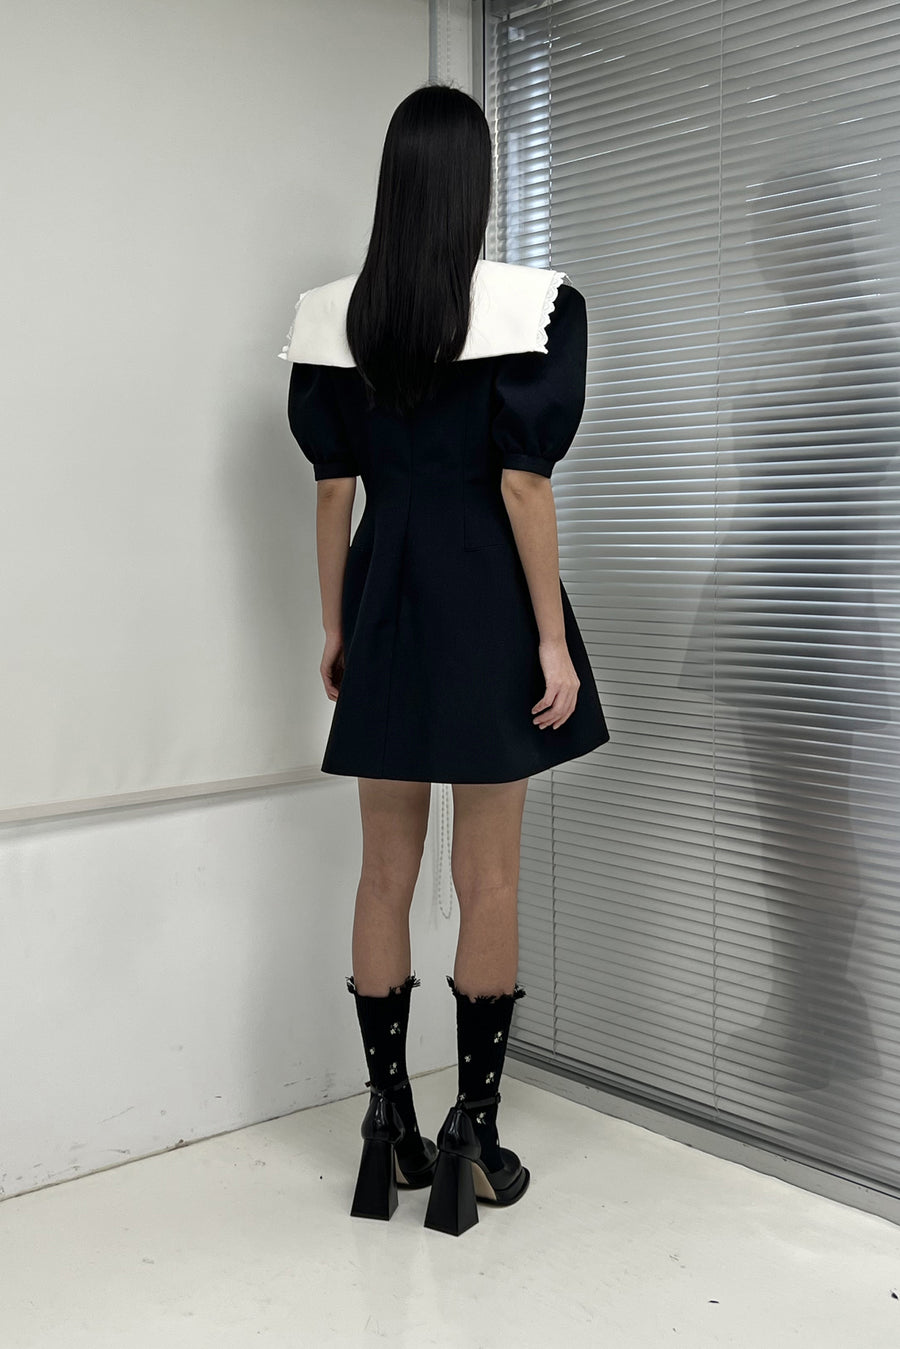 Shushu Tong - Oversized Collar Dress